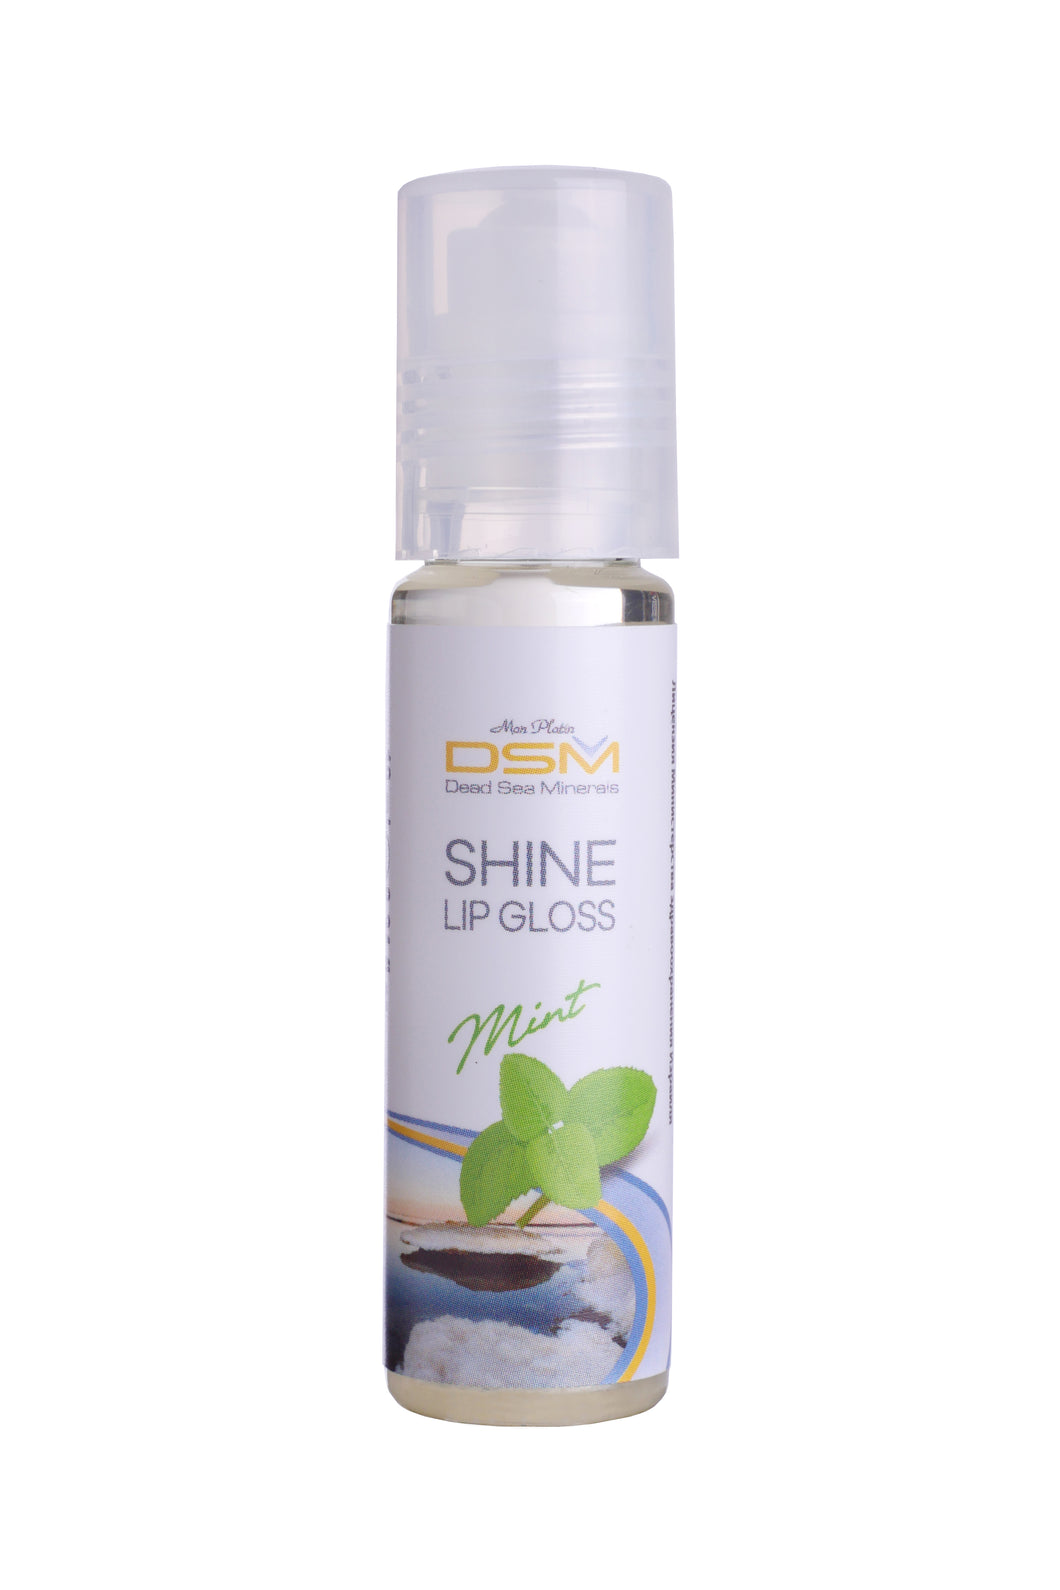 Shine lip gloss Fruit Kiss Mint flavor (DSM299)